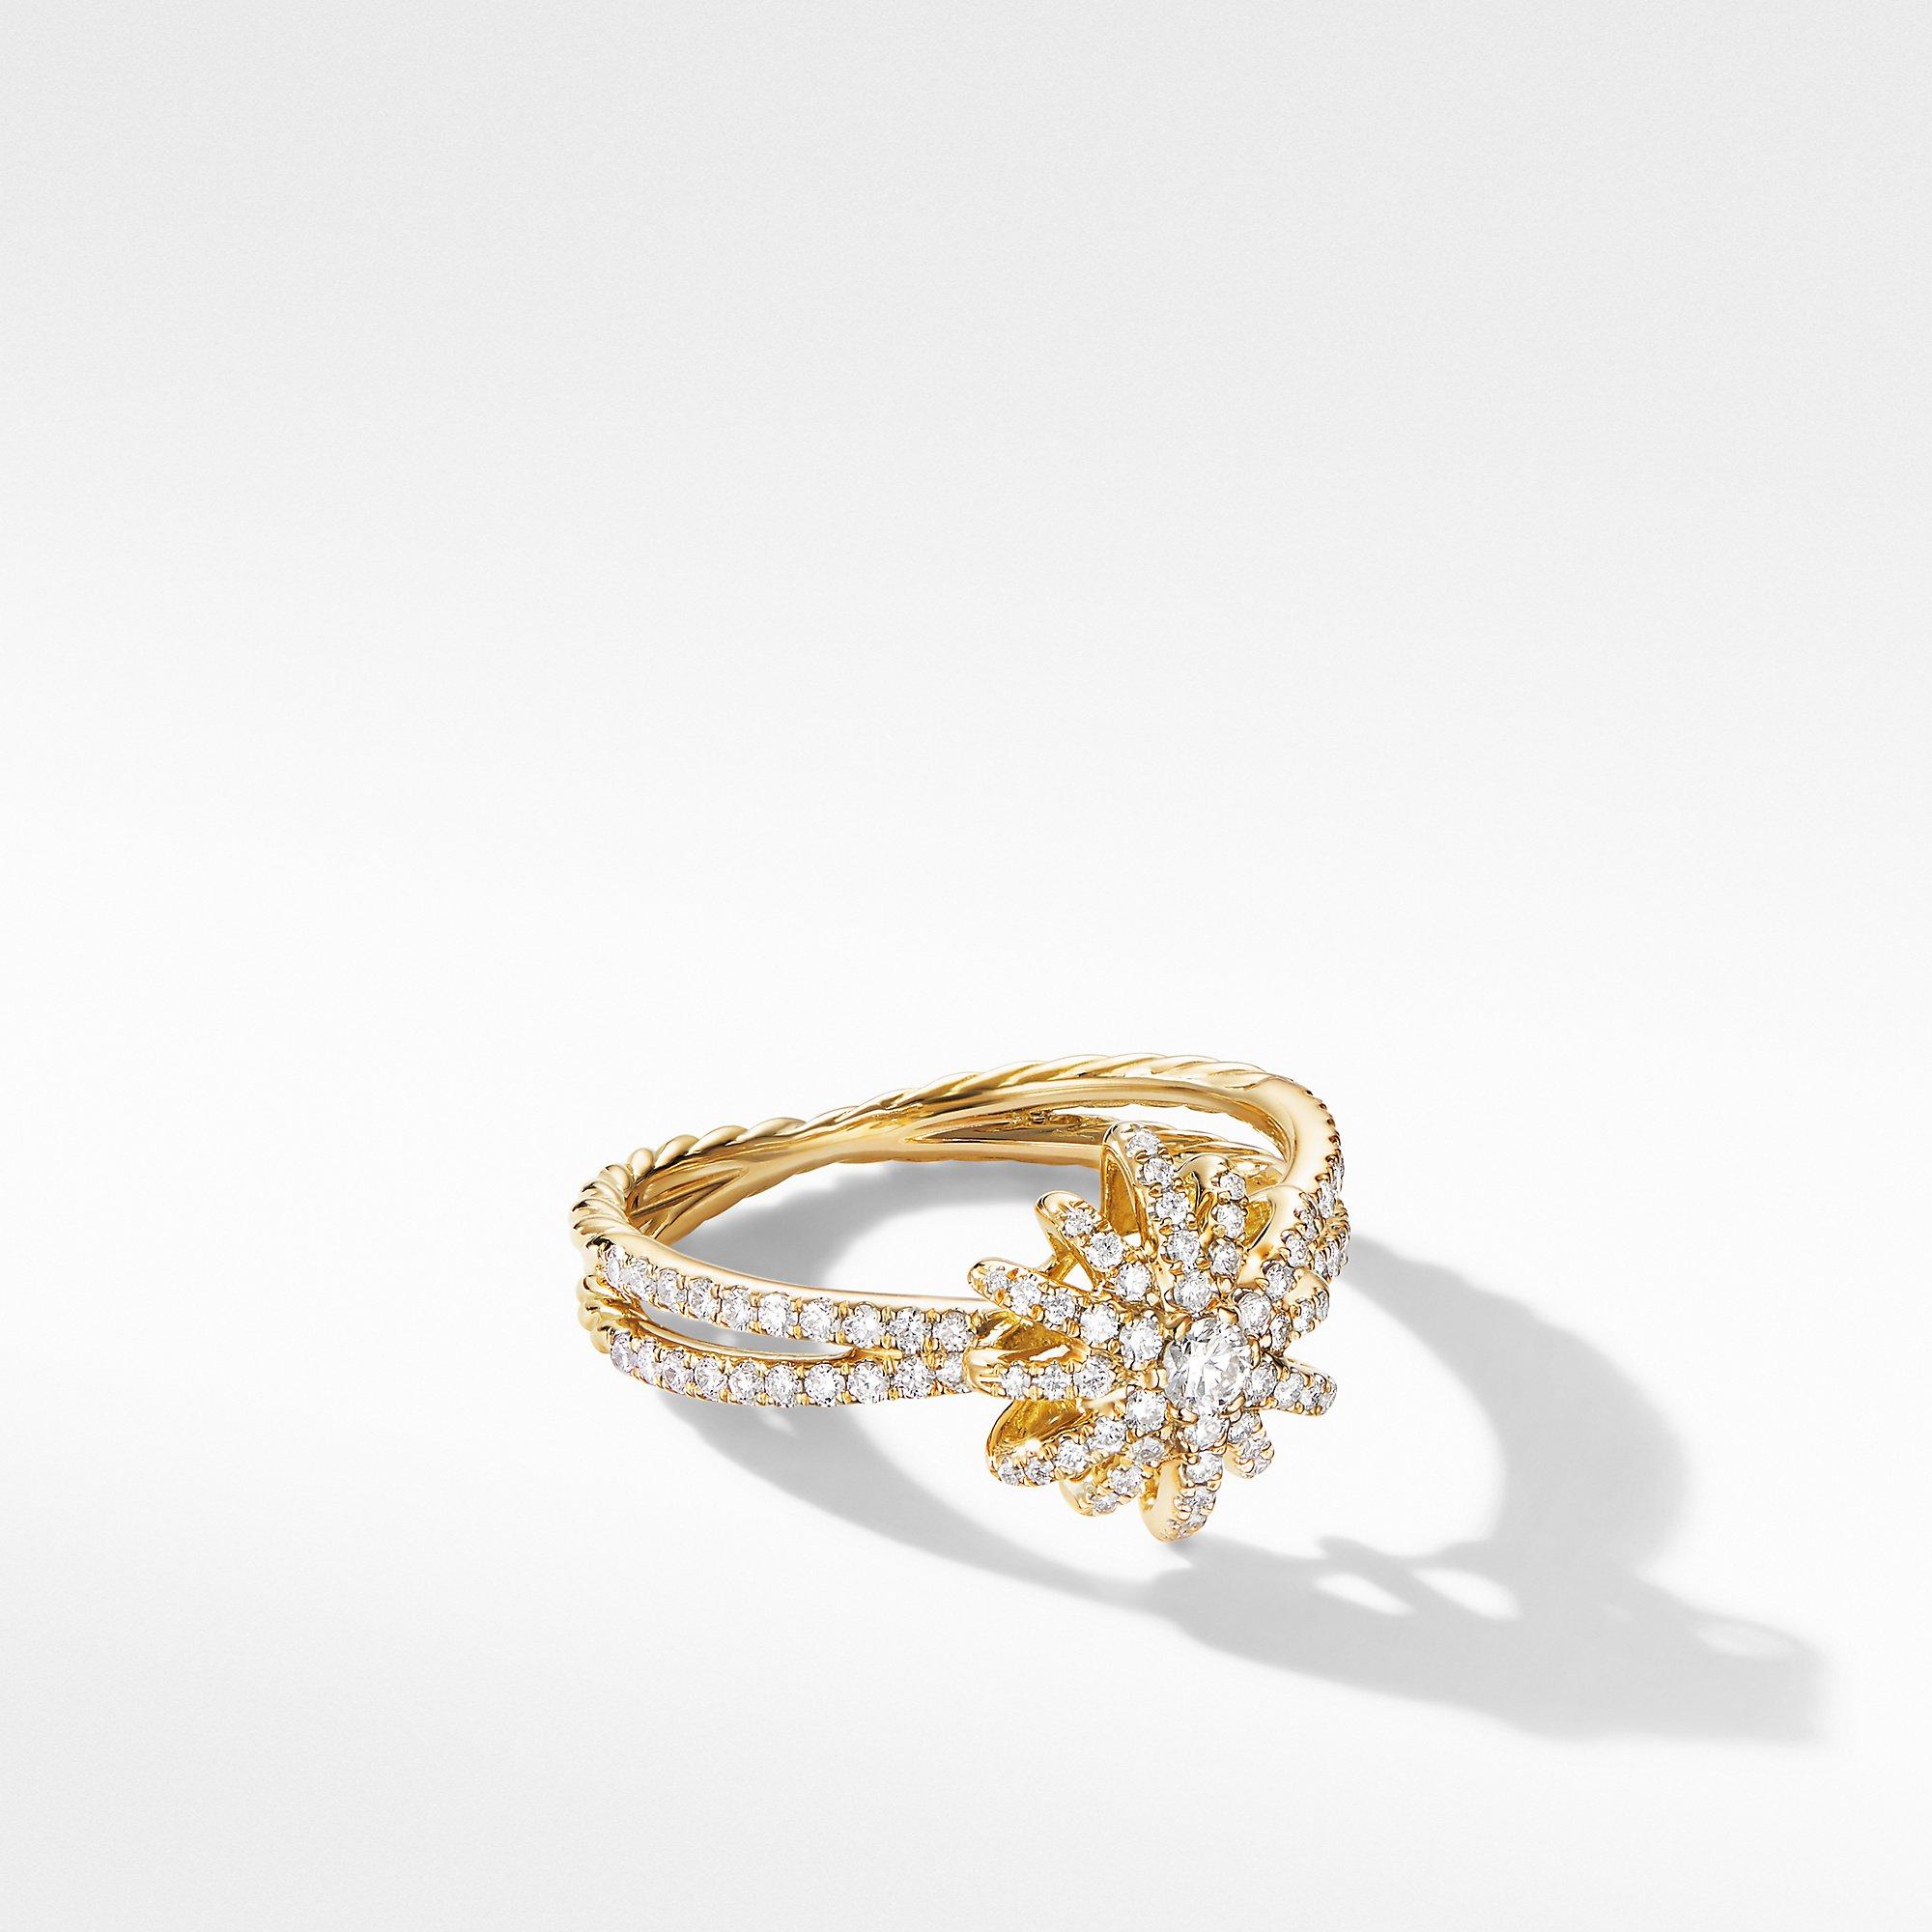 David Yurman Starburst Ring in 18k Yellow Gold with Pave Diamonds, size 7